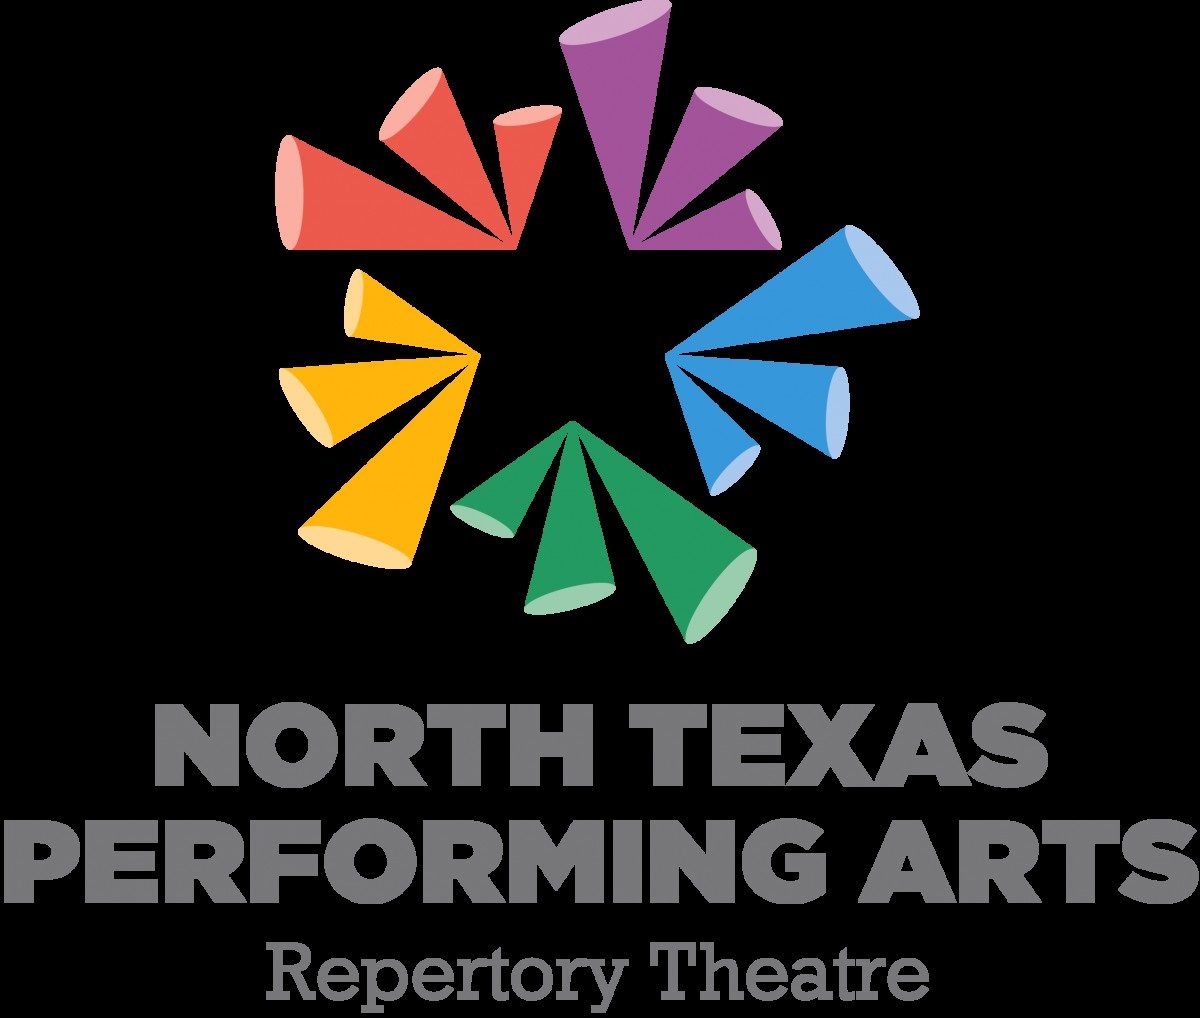 North Texas Performing Arts Art&Seek Arts, Music